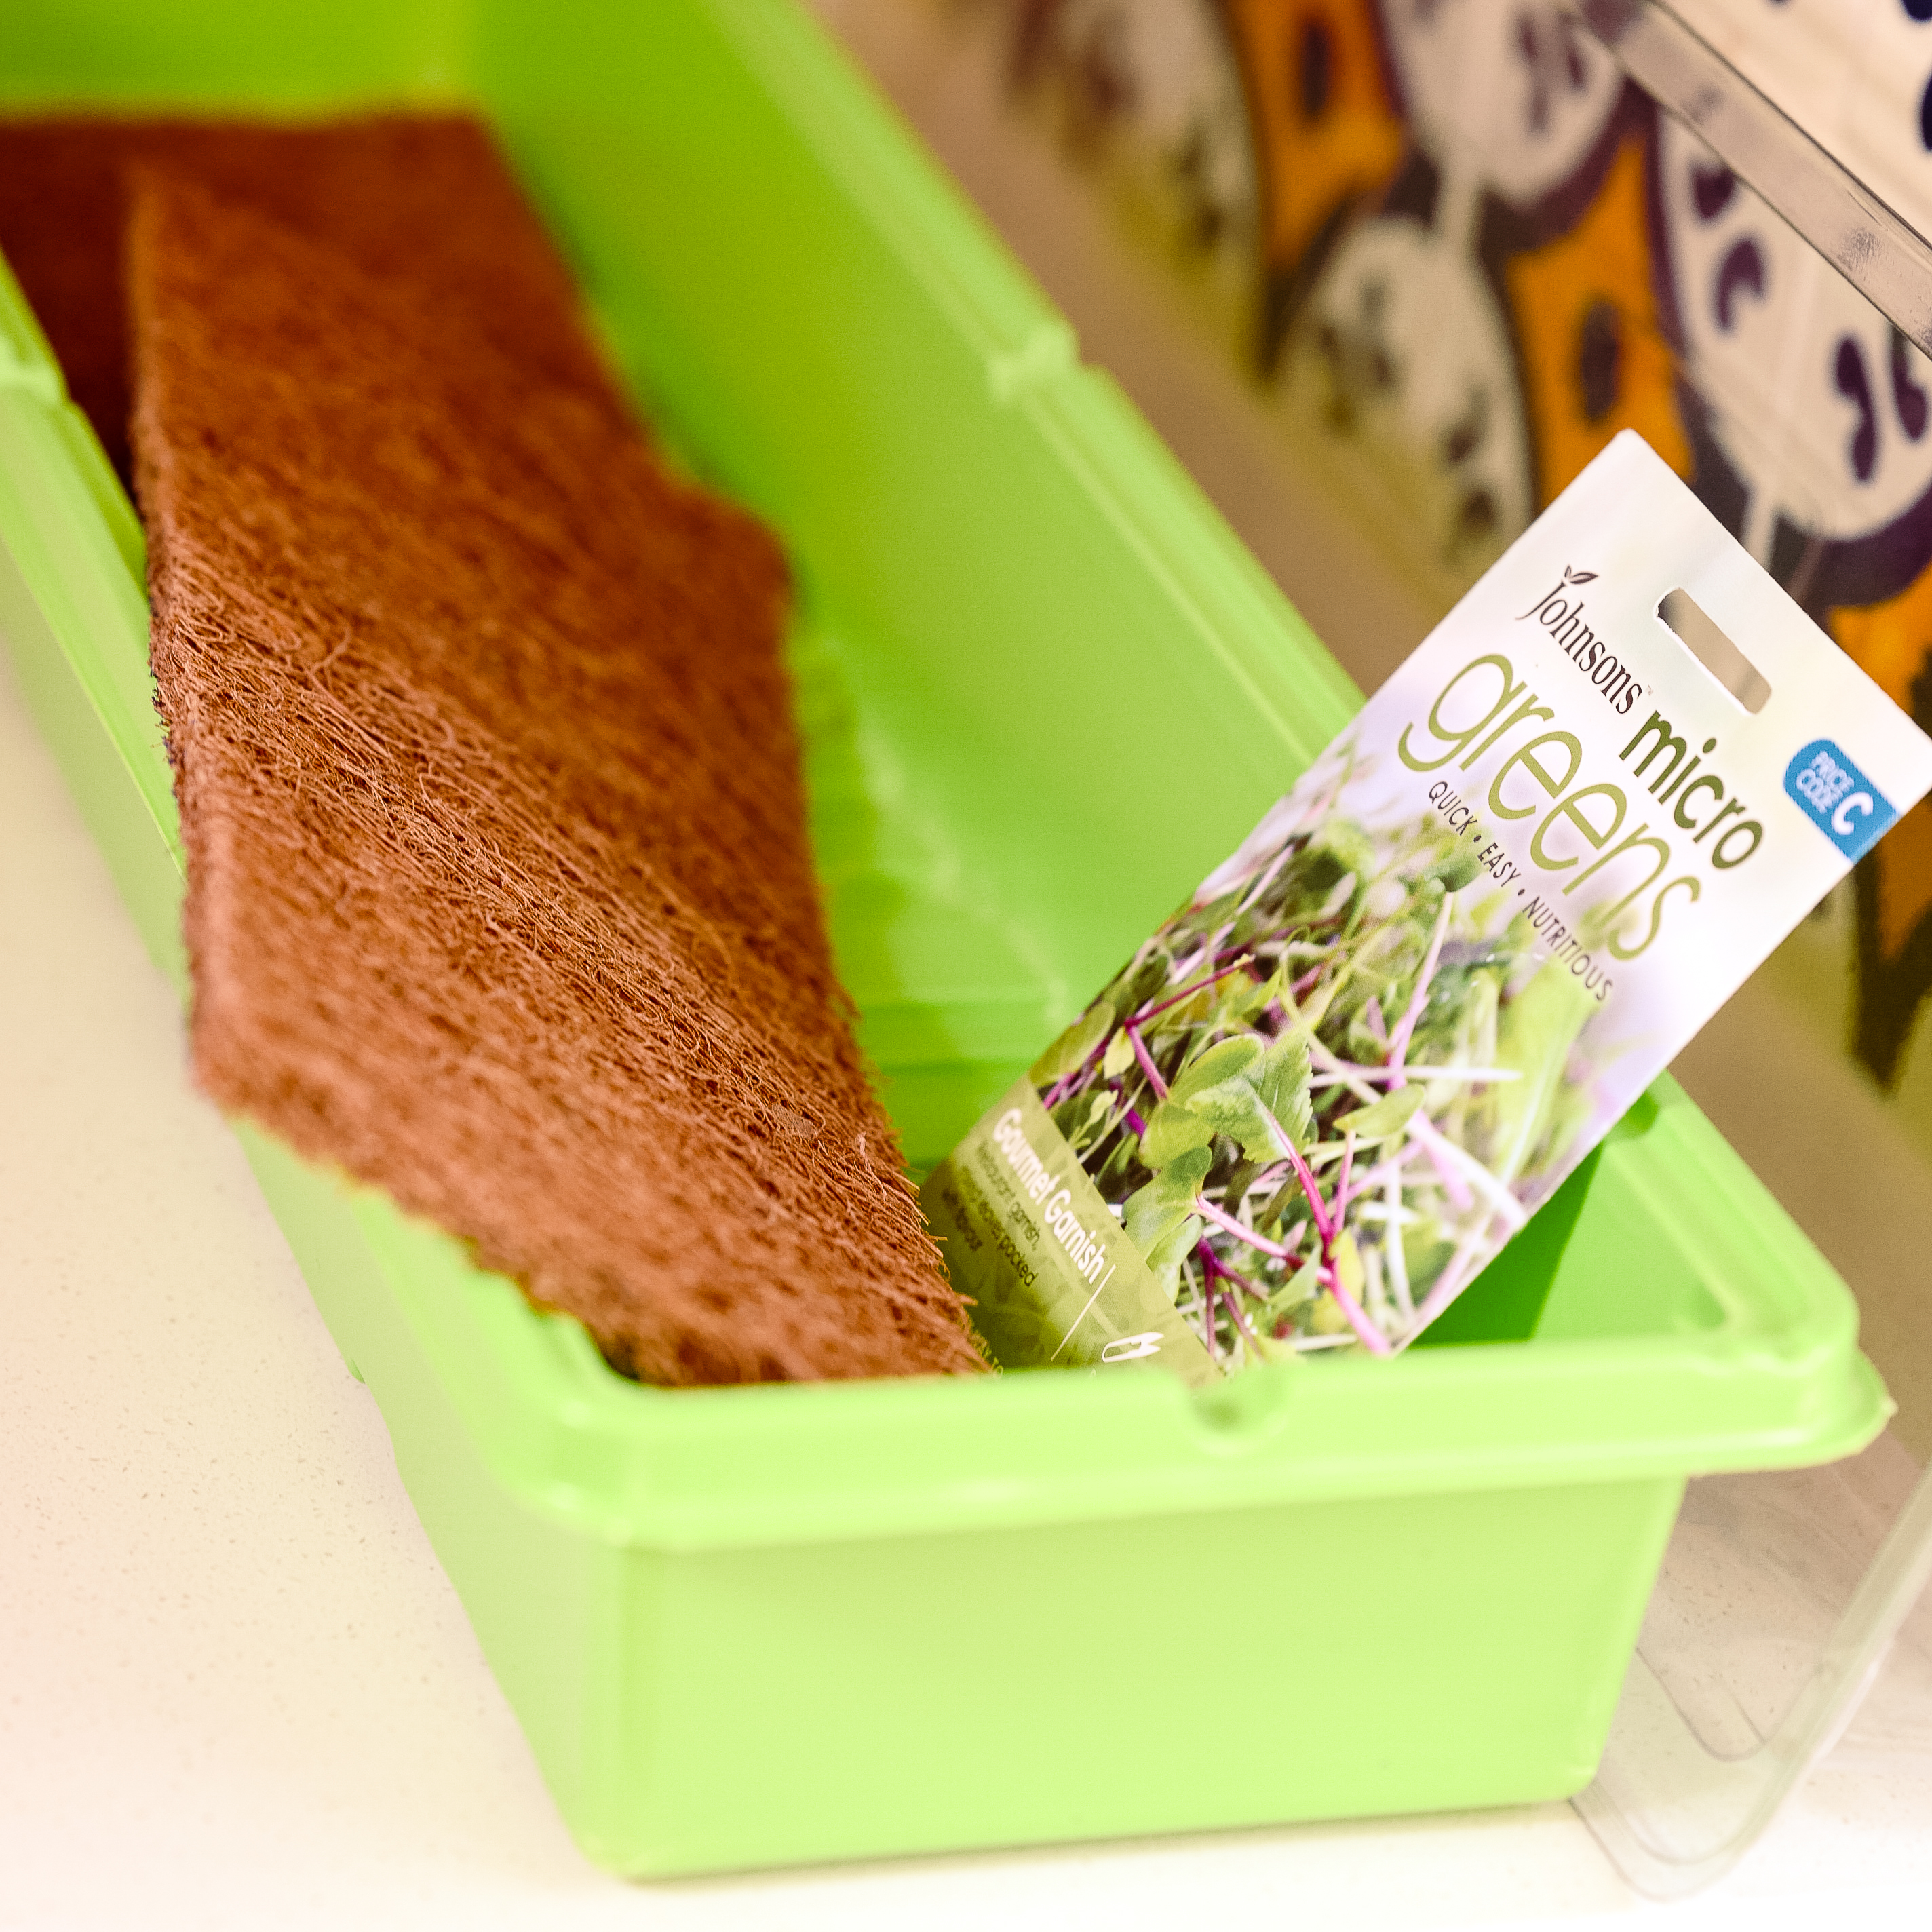 Grow Your Own Microgreens Kit - Seed Propagator